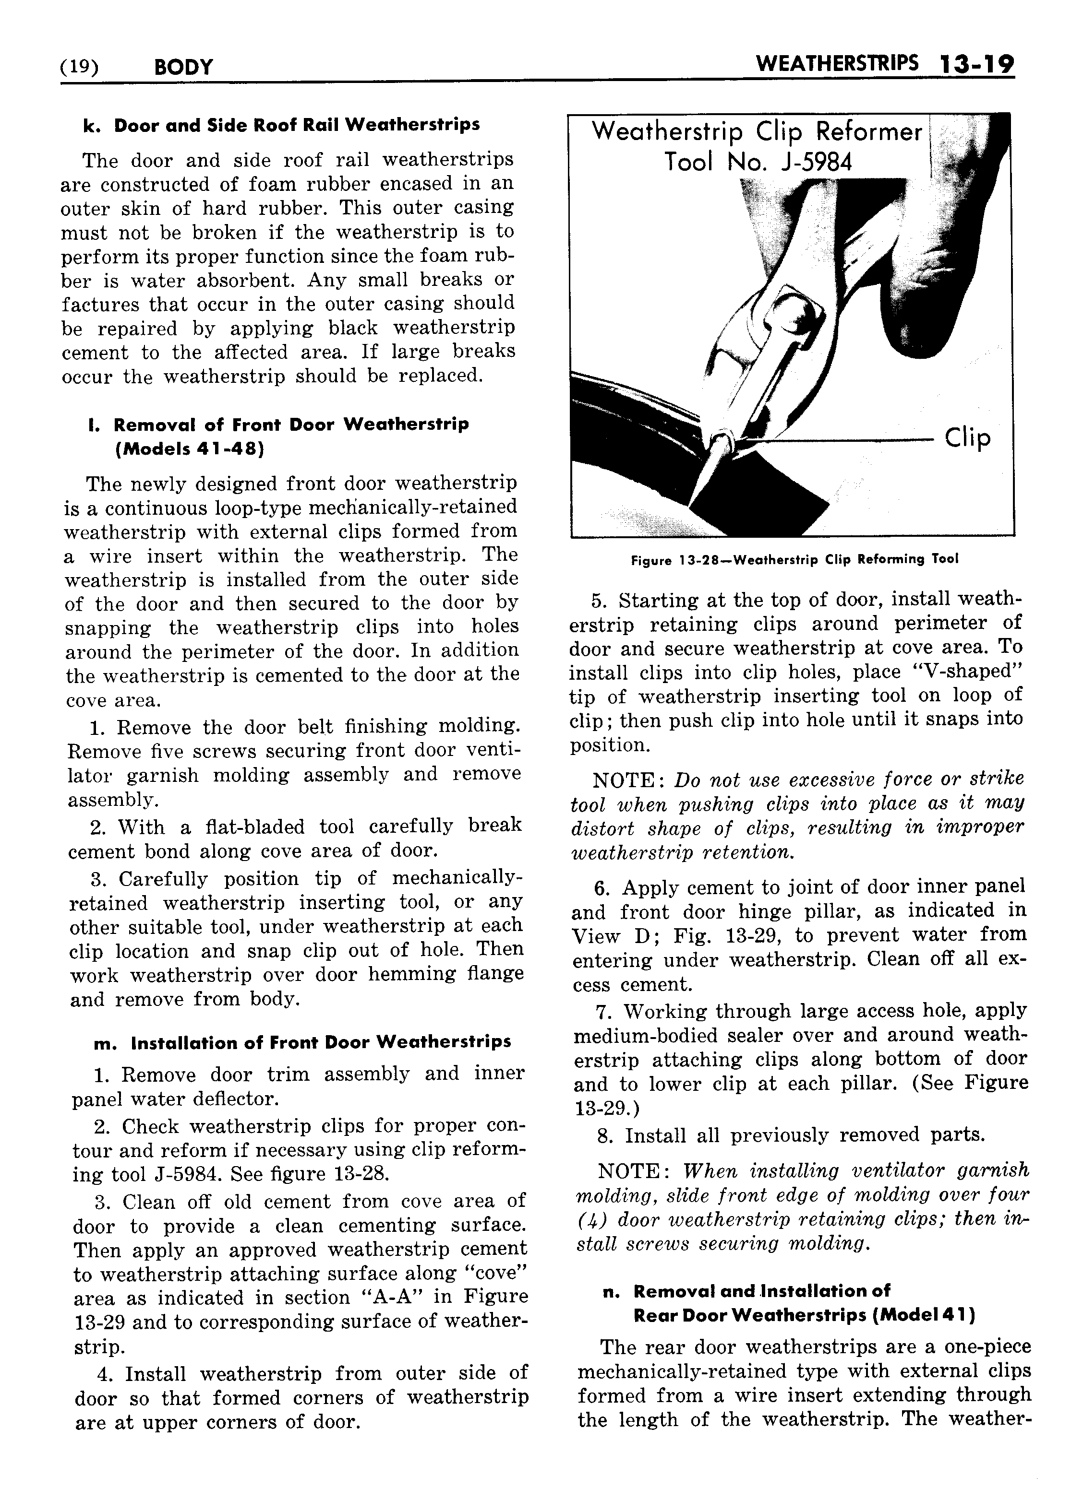 n_1957 Buick Body Service Manual-021-021.jpg